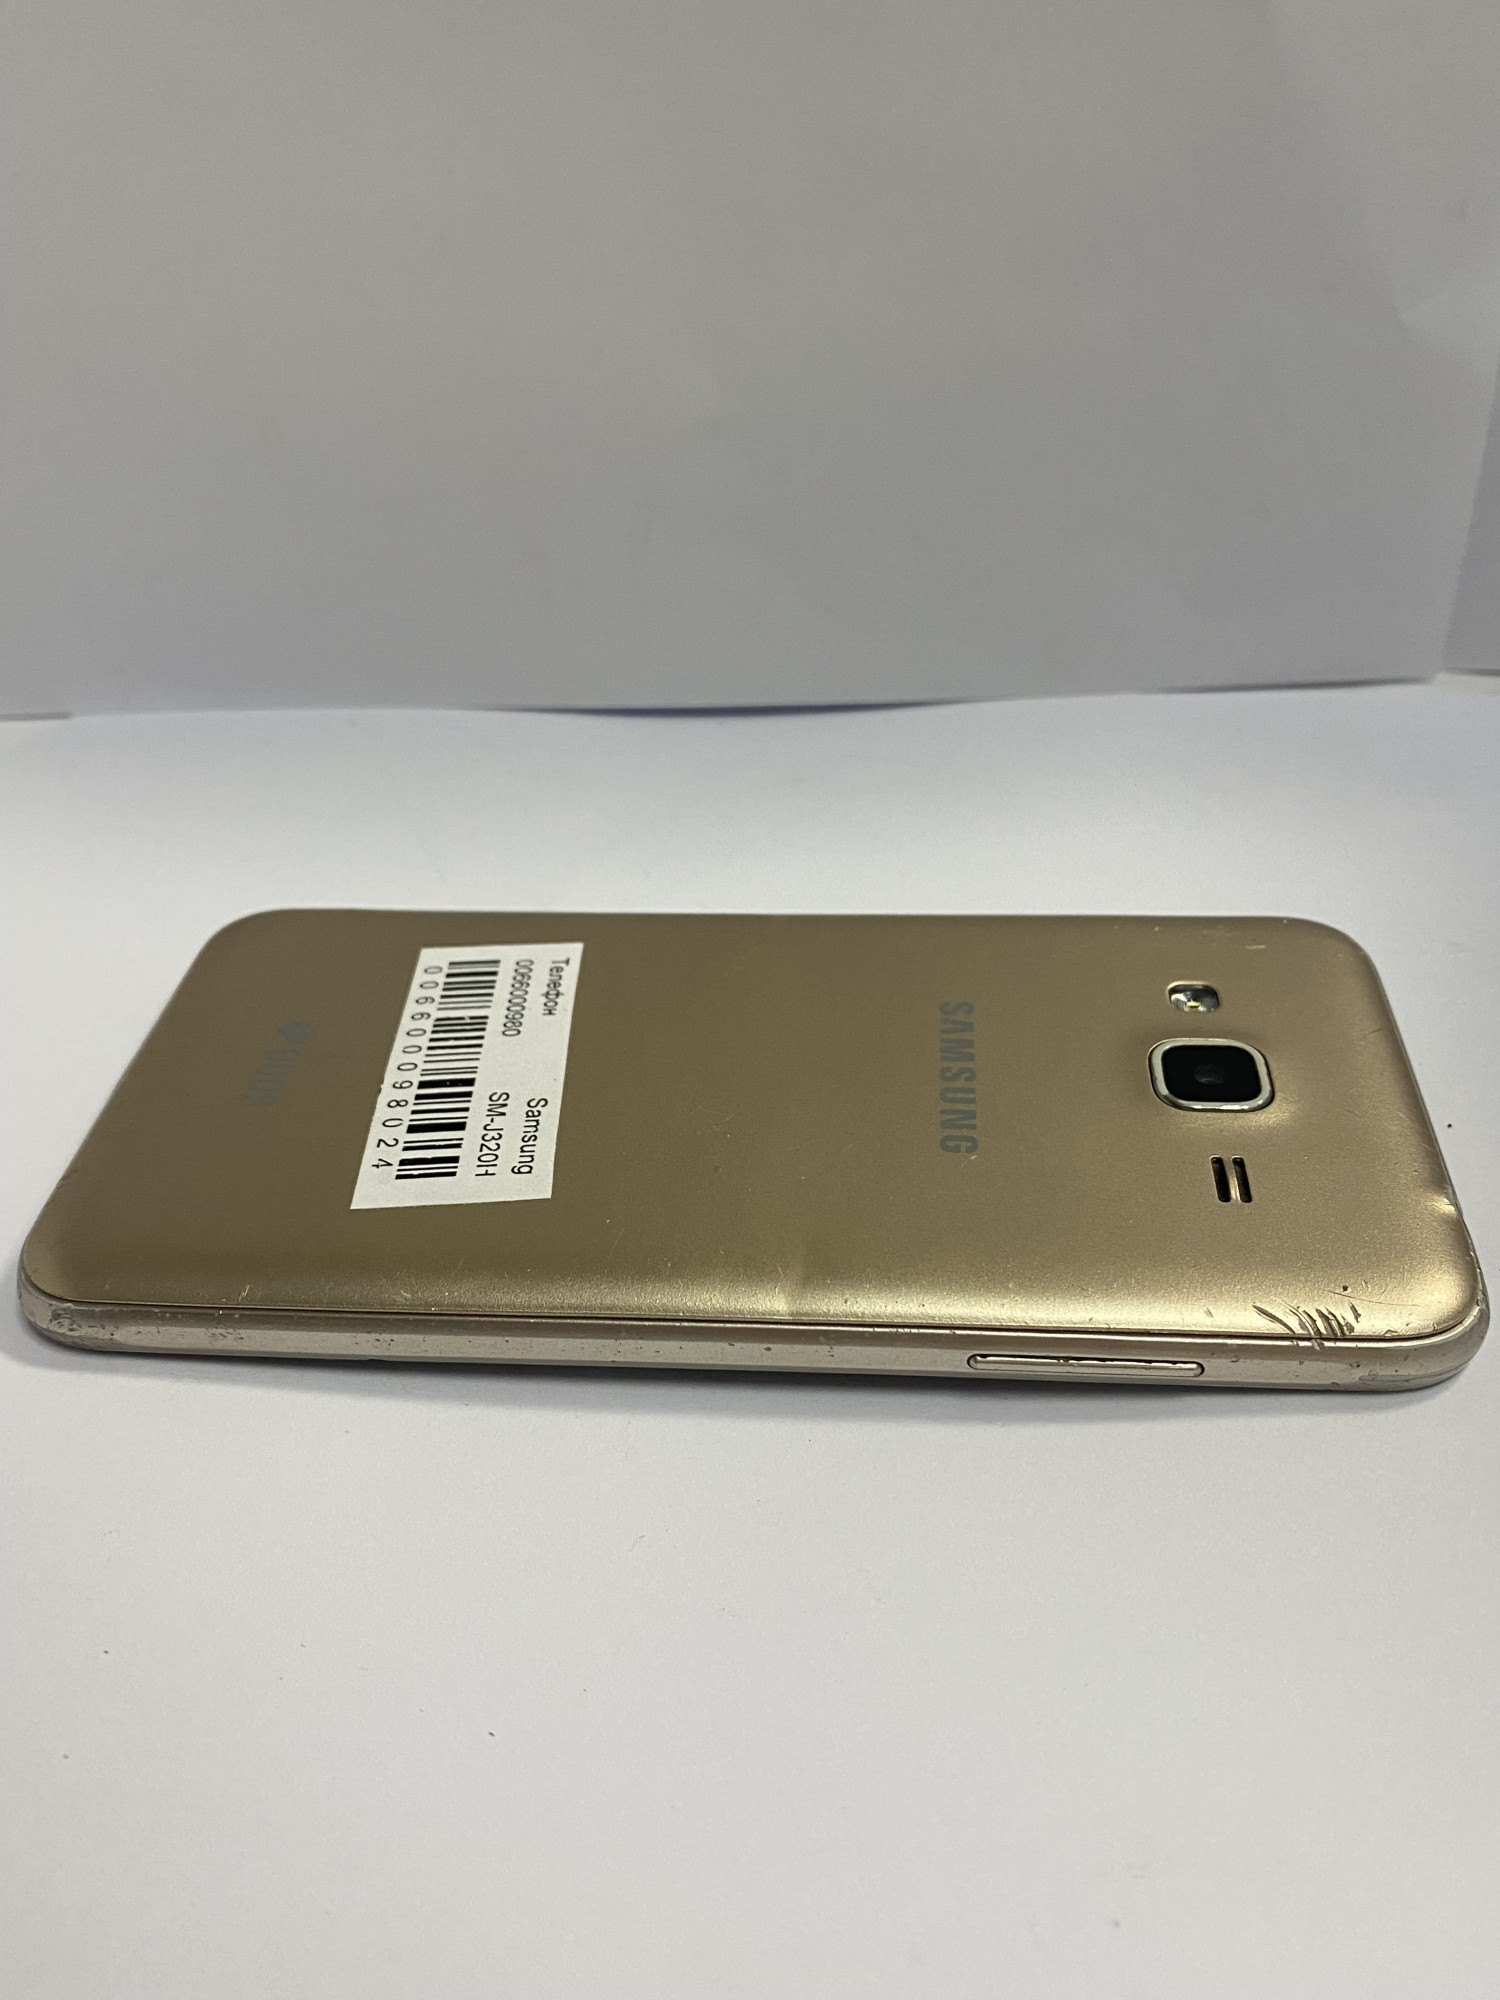 Samsung Galaxy J3 2016 Gold (SM-J320HZDD) 1/8Gb  2